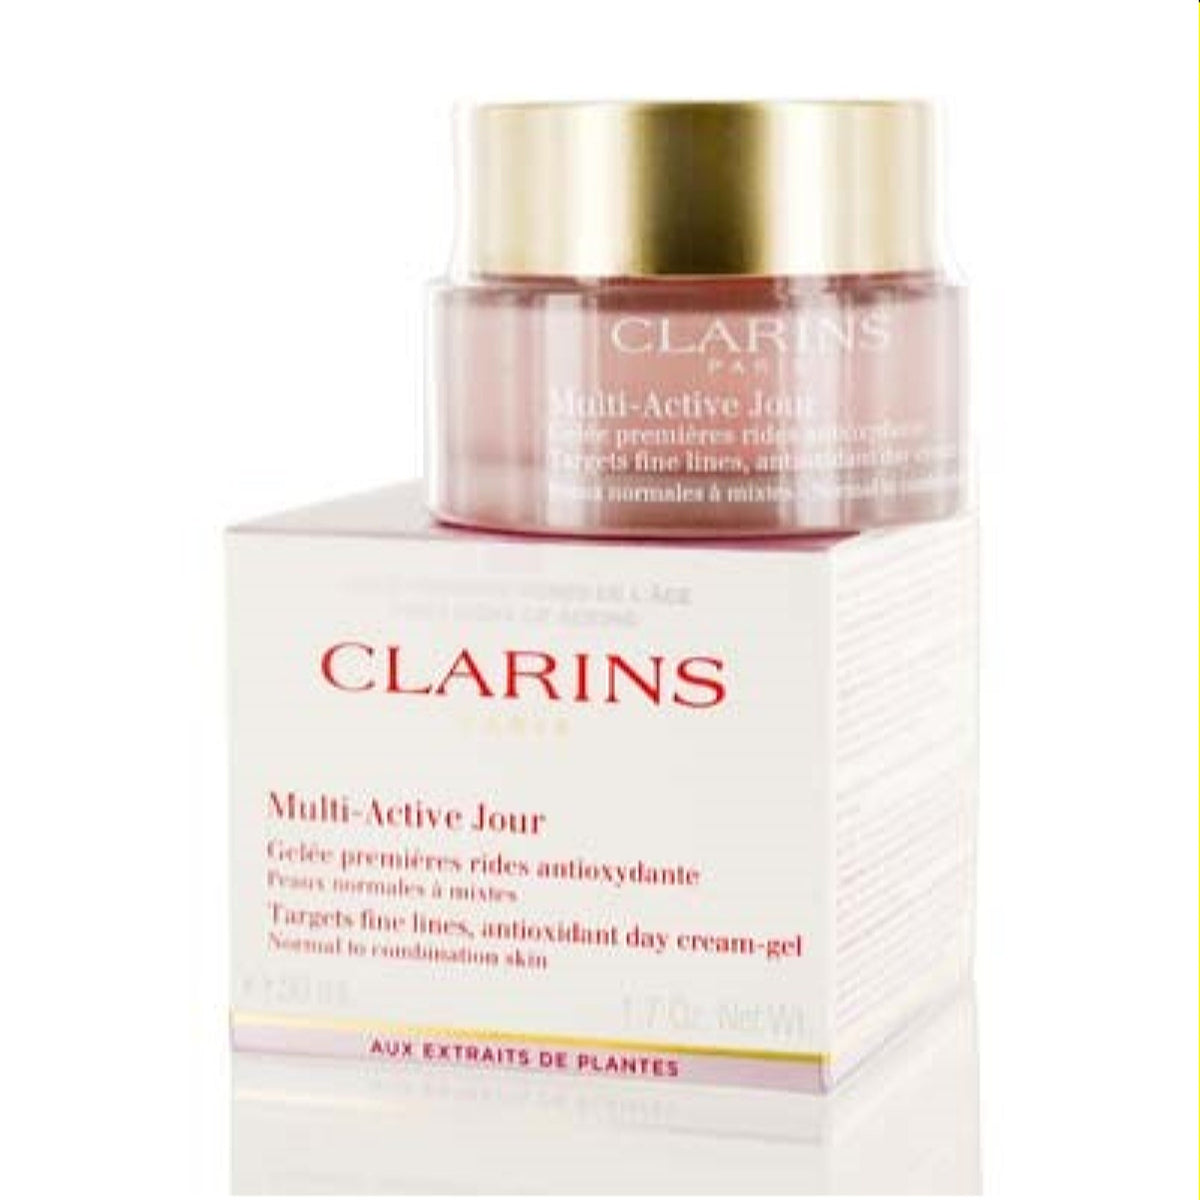 Clarins Multi-Active Antioxidant Day Cream-Gel 1.7 Oz 80009041